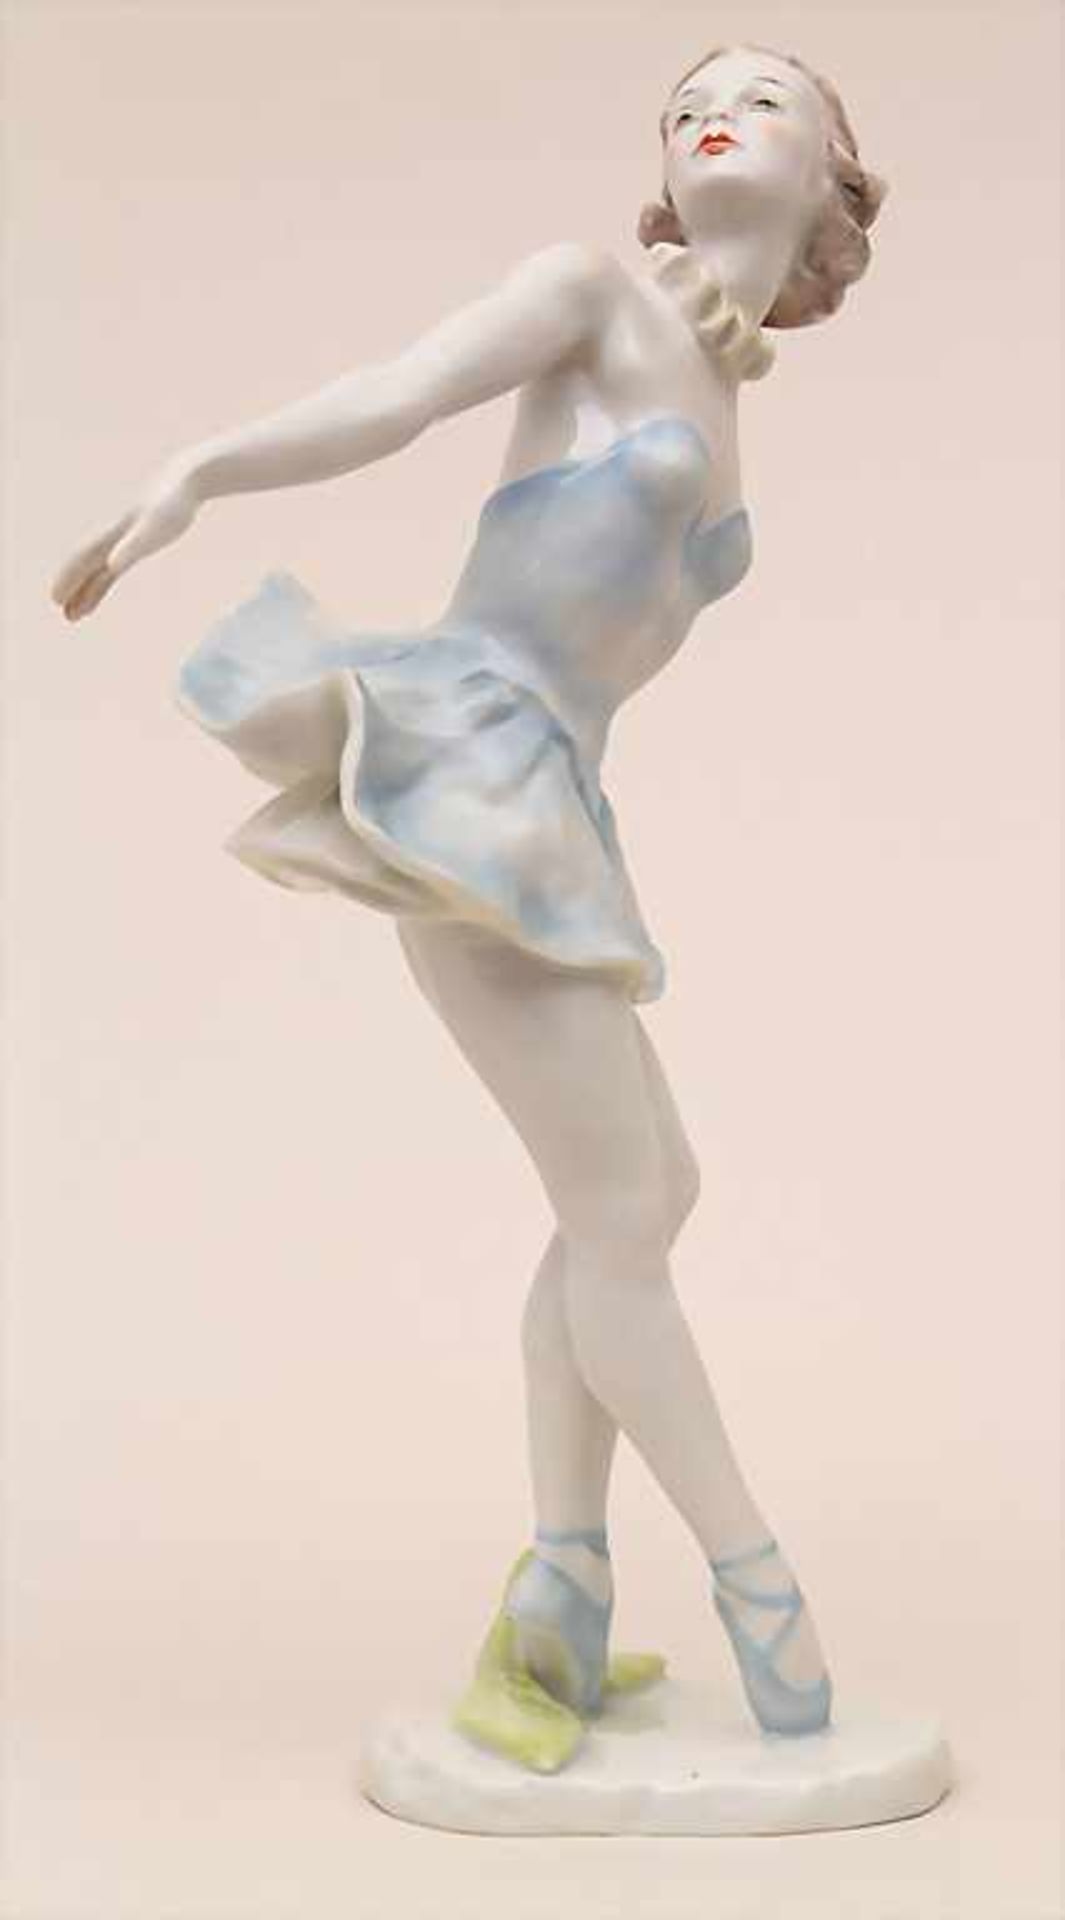 Ballerina Figur 'Marianne Simson' / A ballerina figure 'Marianne Simson', Lore Friedrich-Gronau